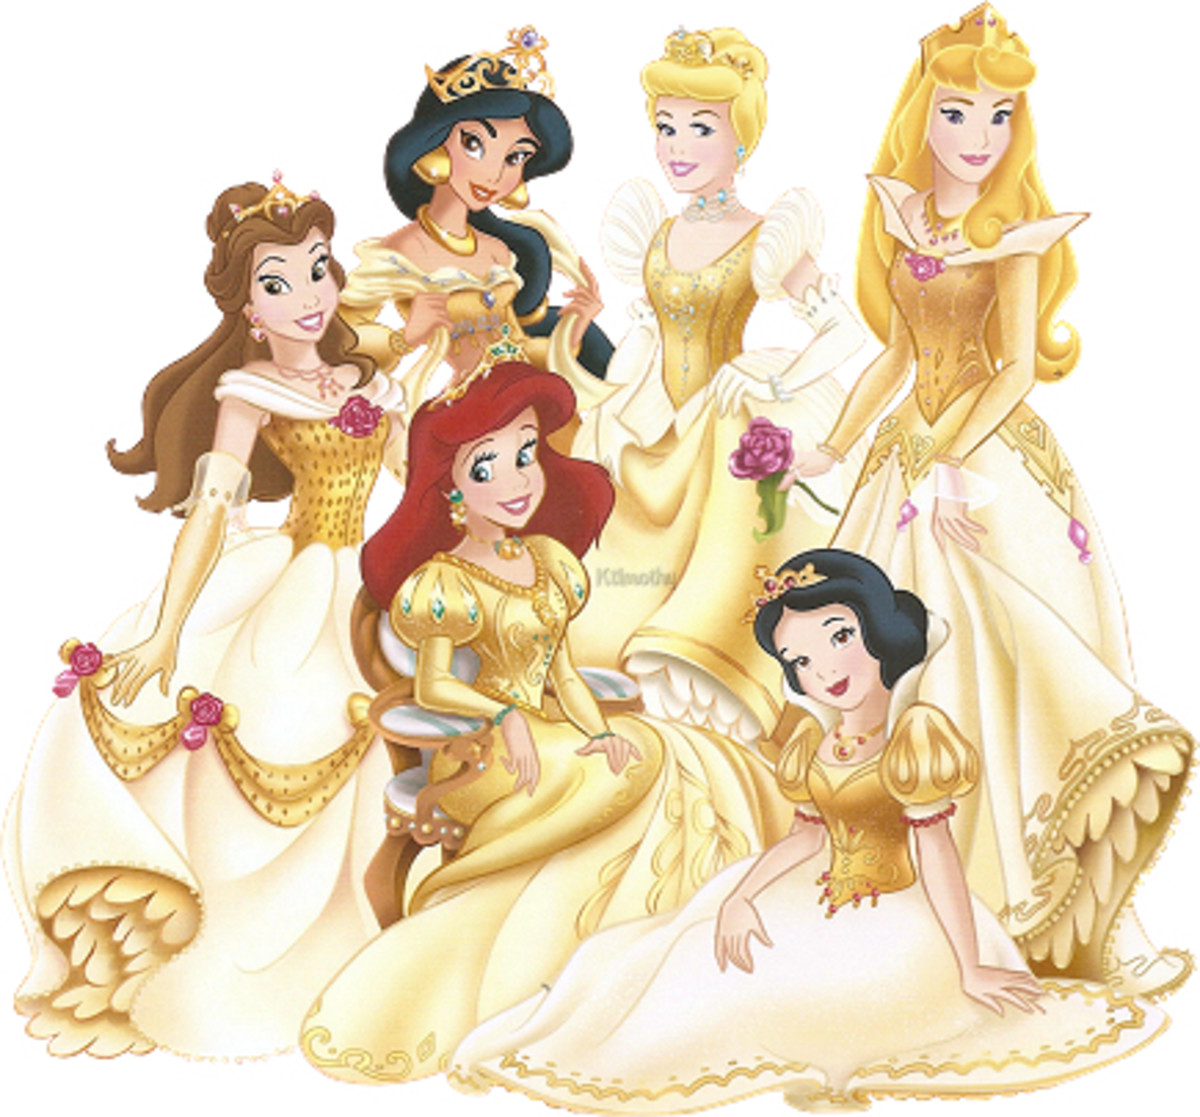 The original Disney princesses: Belle, Jasmine, Ariel, Arora, Cinderella, and Snow White.